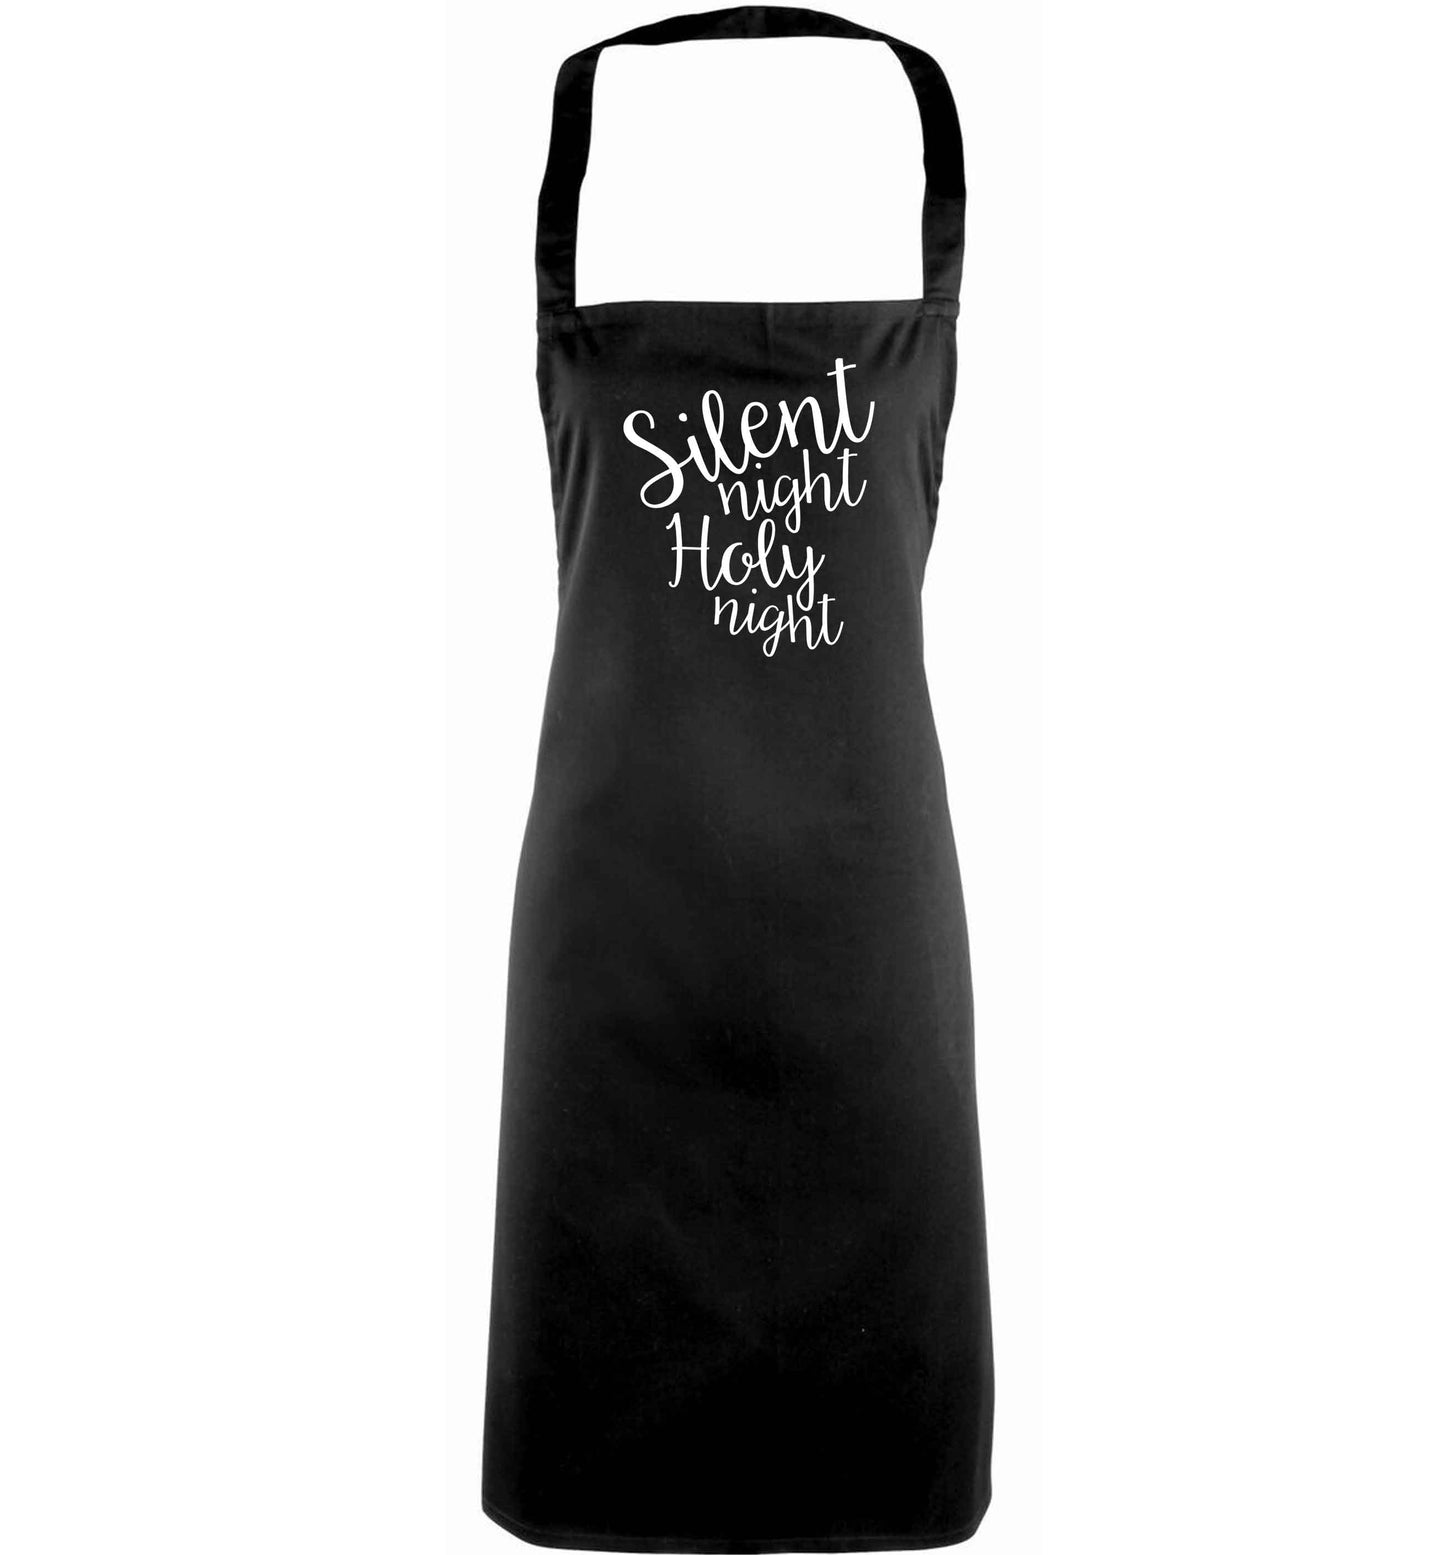 Silent night holy night adults black apron